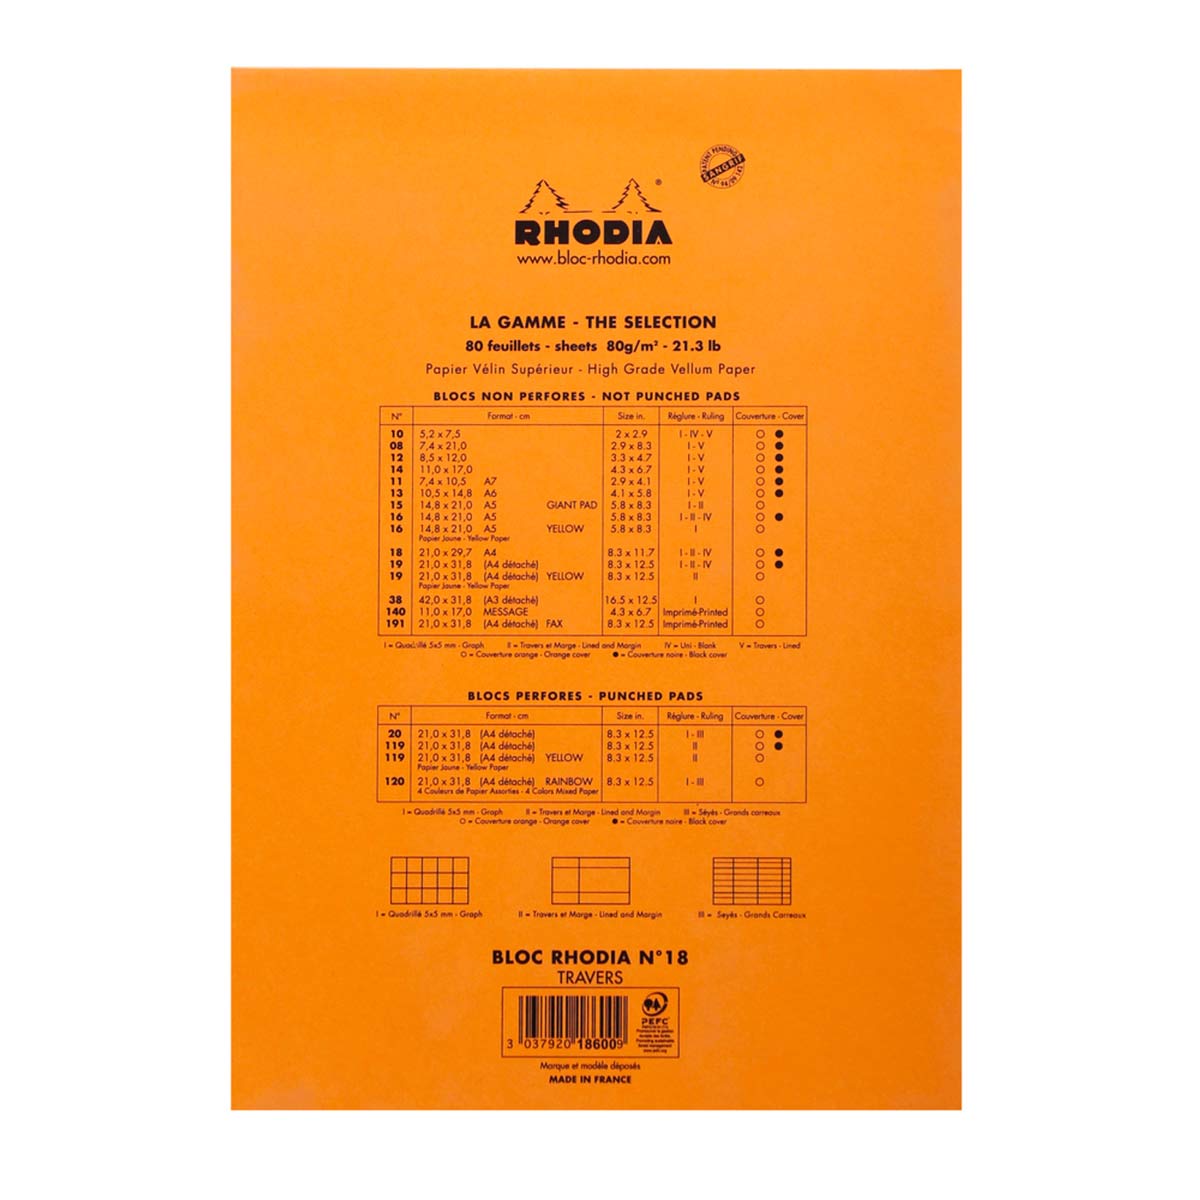 Rhodia Basics Block No. 18 lined orange